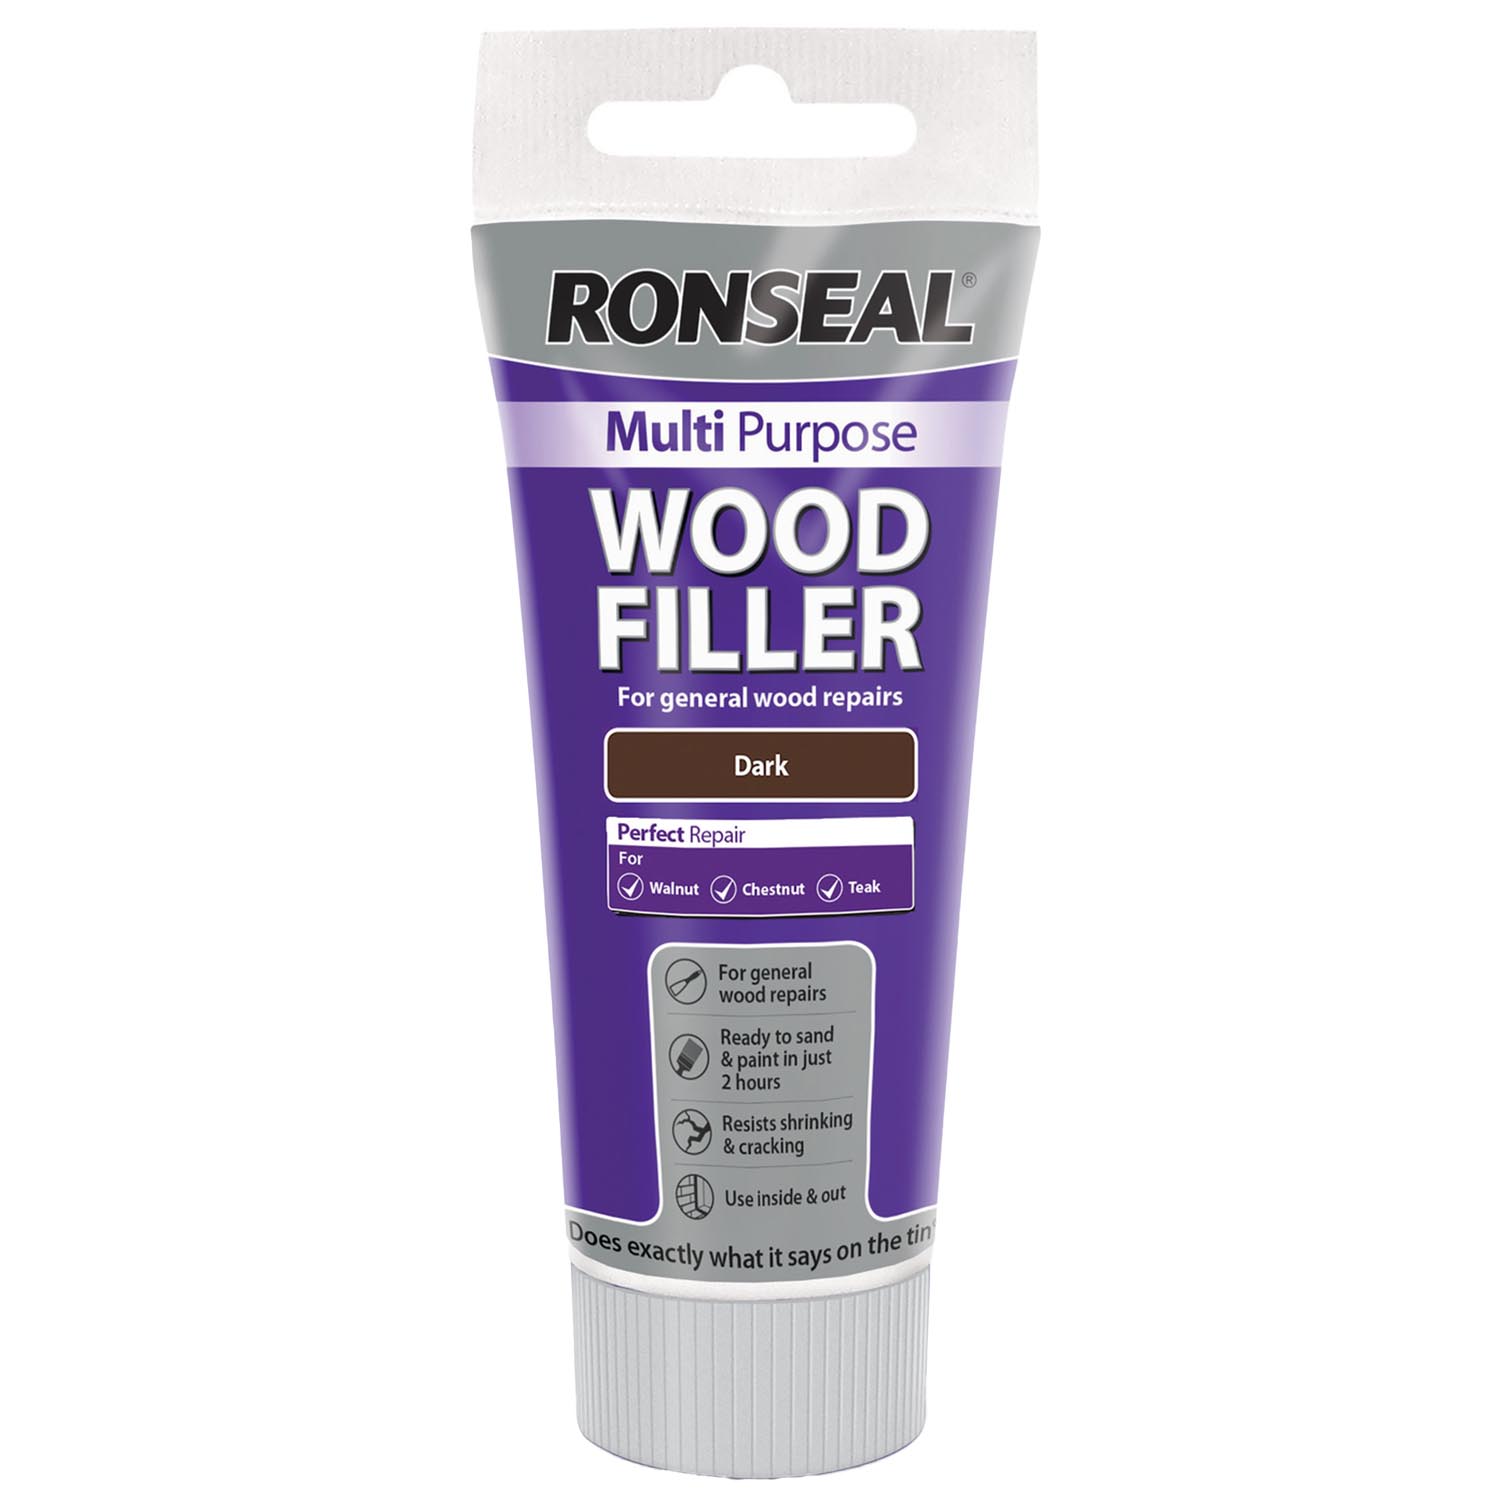 Ronseal Multi Purpose Dark Wood Filler Image